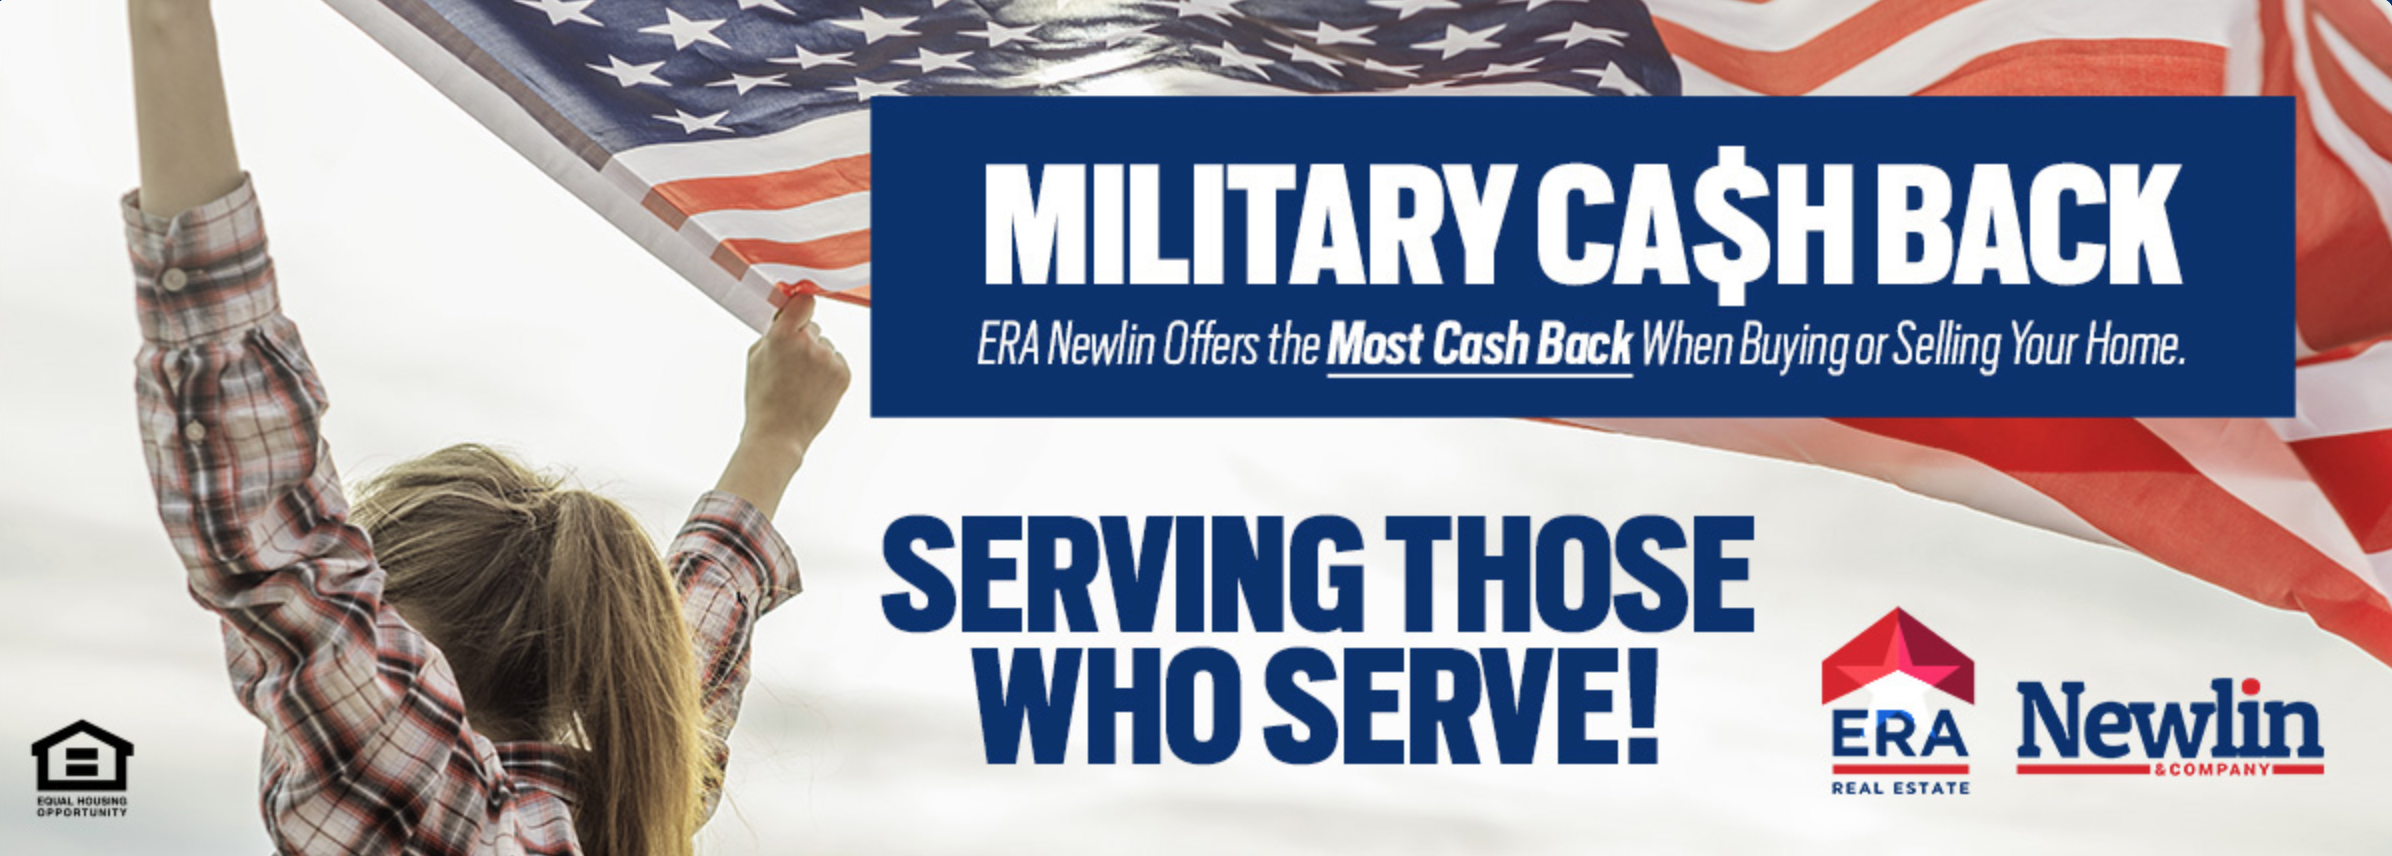 Military Cash Back